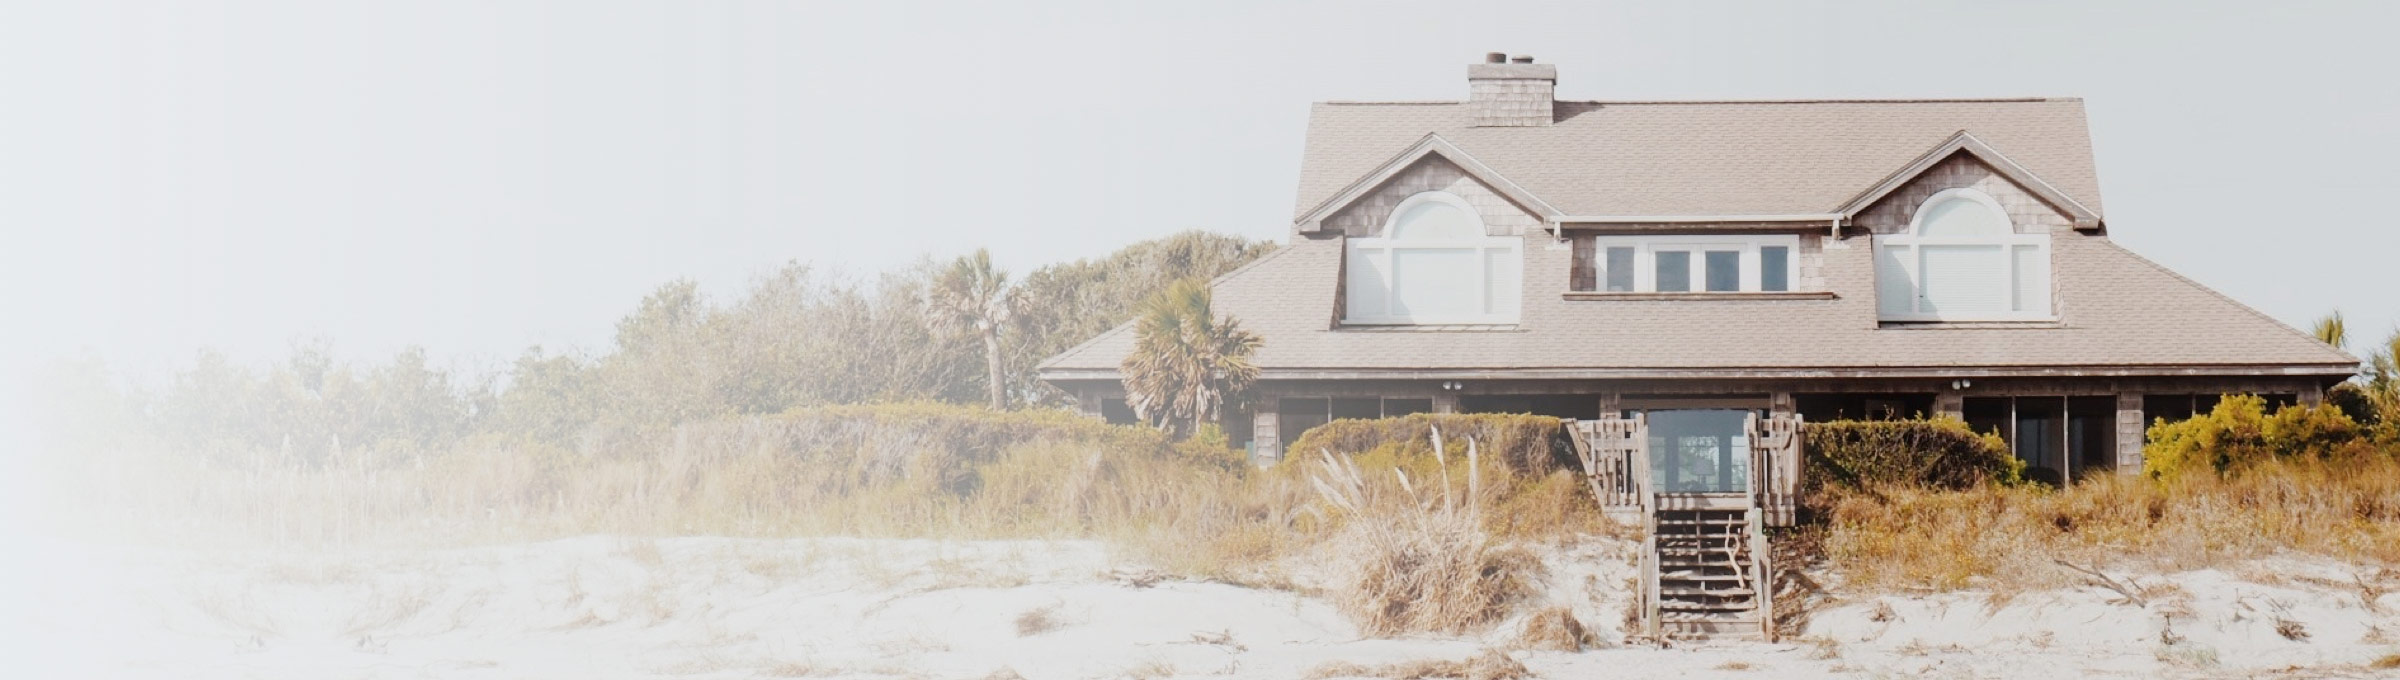 A beach house.